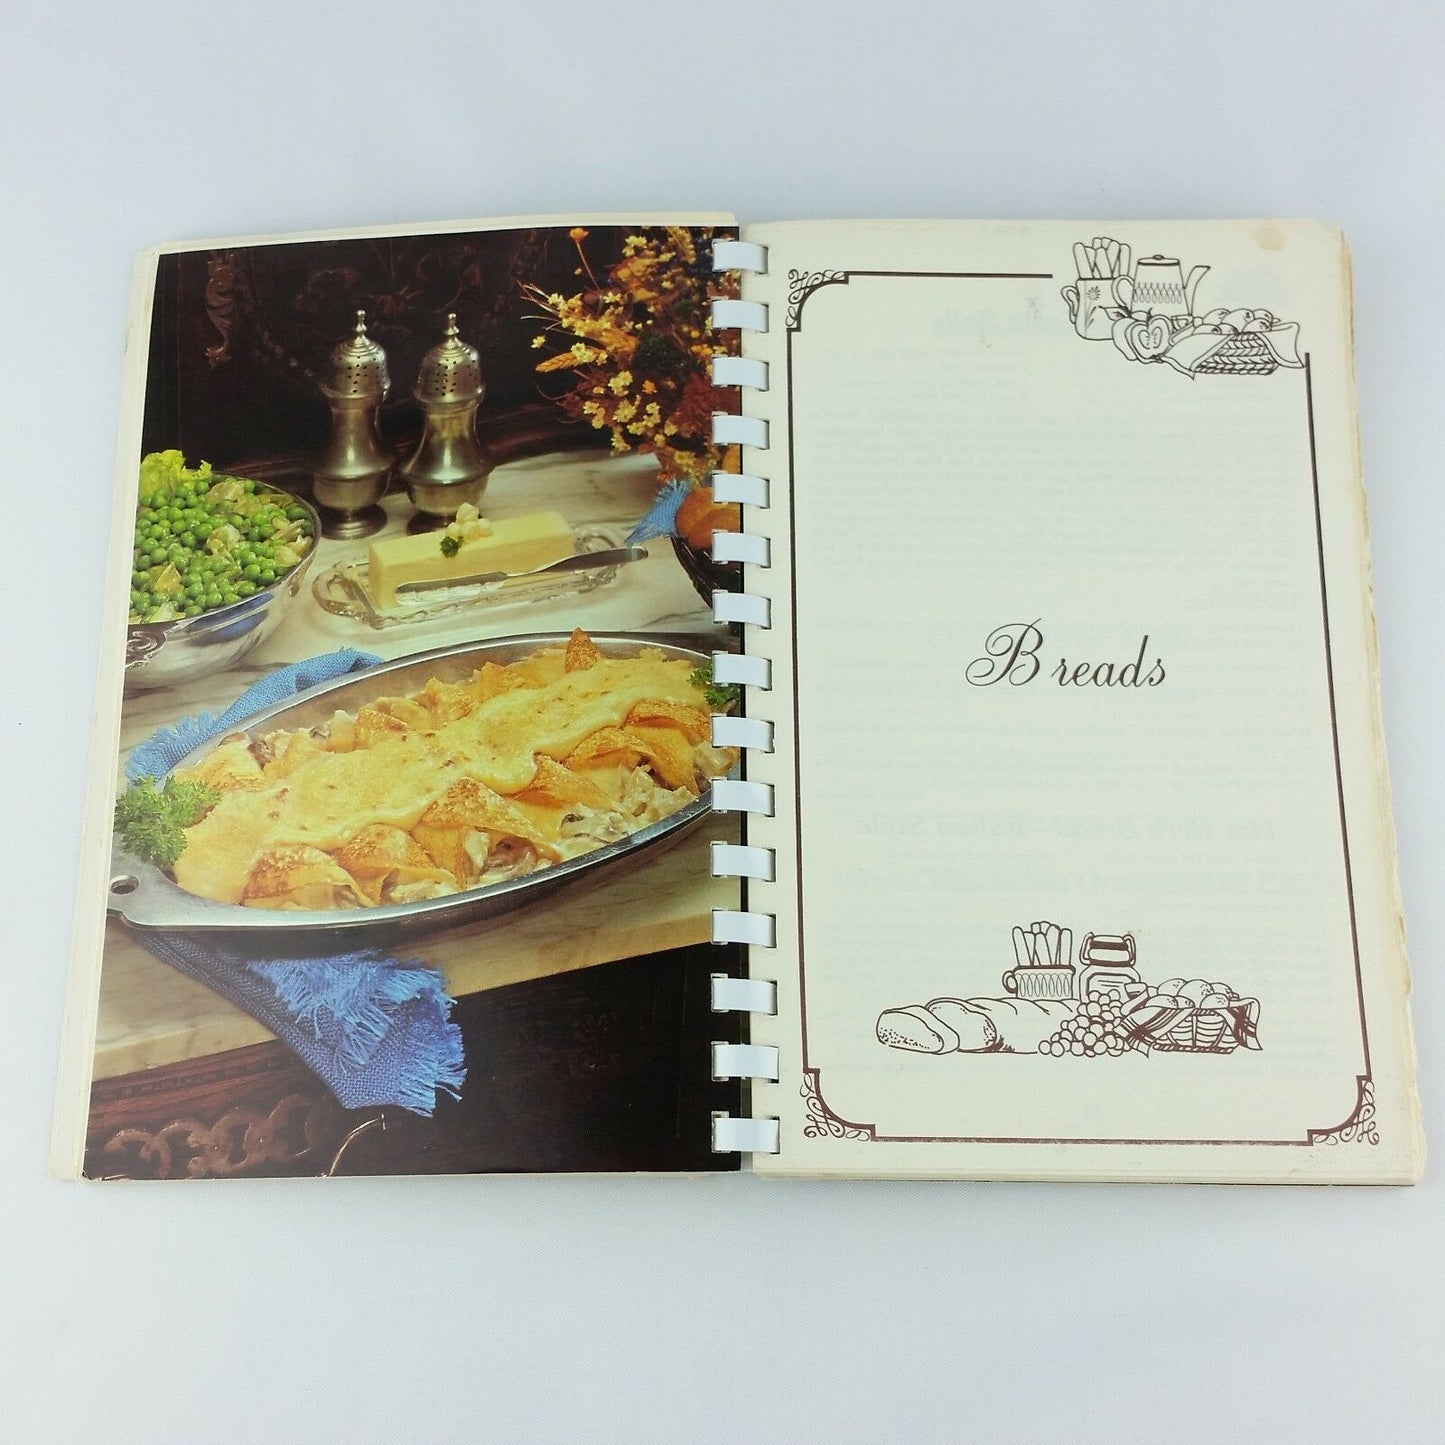 Vintage California Cookbook Home Economics Association A Matter of Taste - At Grandma's Table